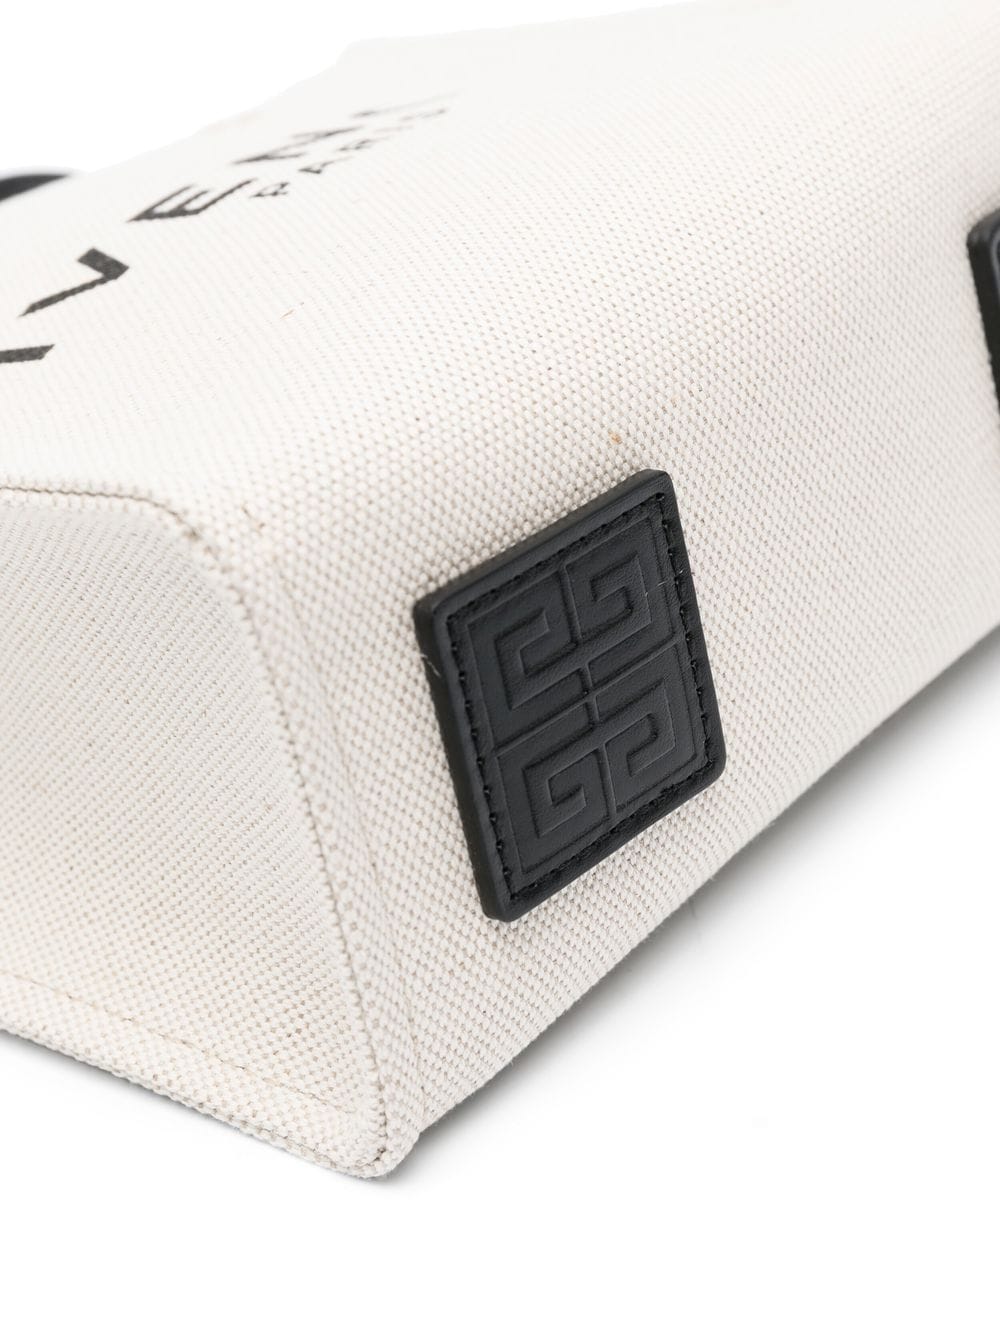 Shop Givenchy G-tote Handbag Canvas Mini Tote Handbag Handbag In Tan